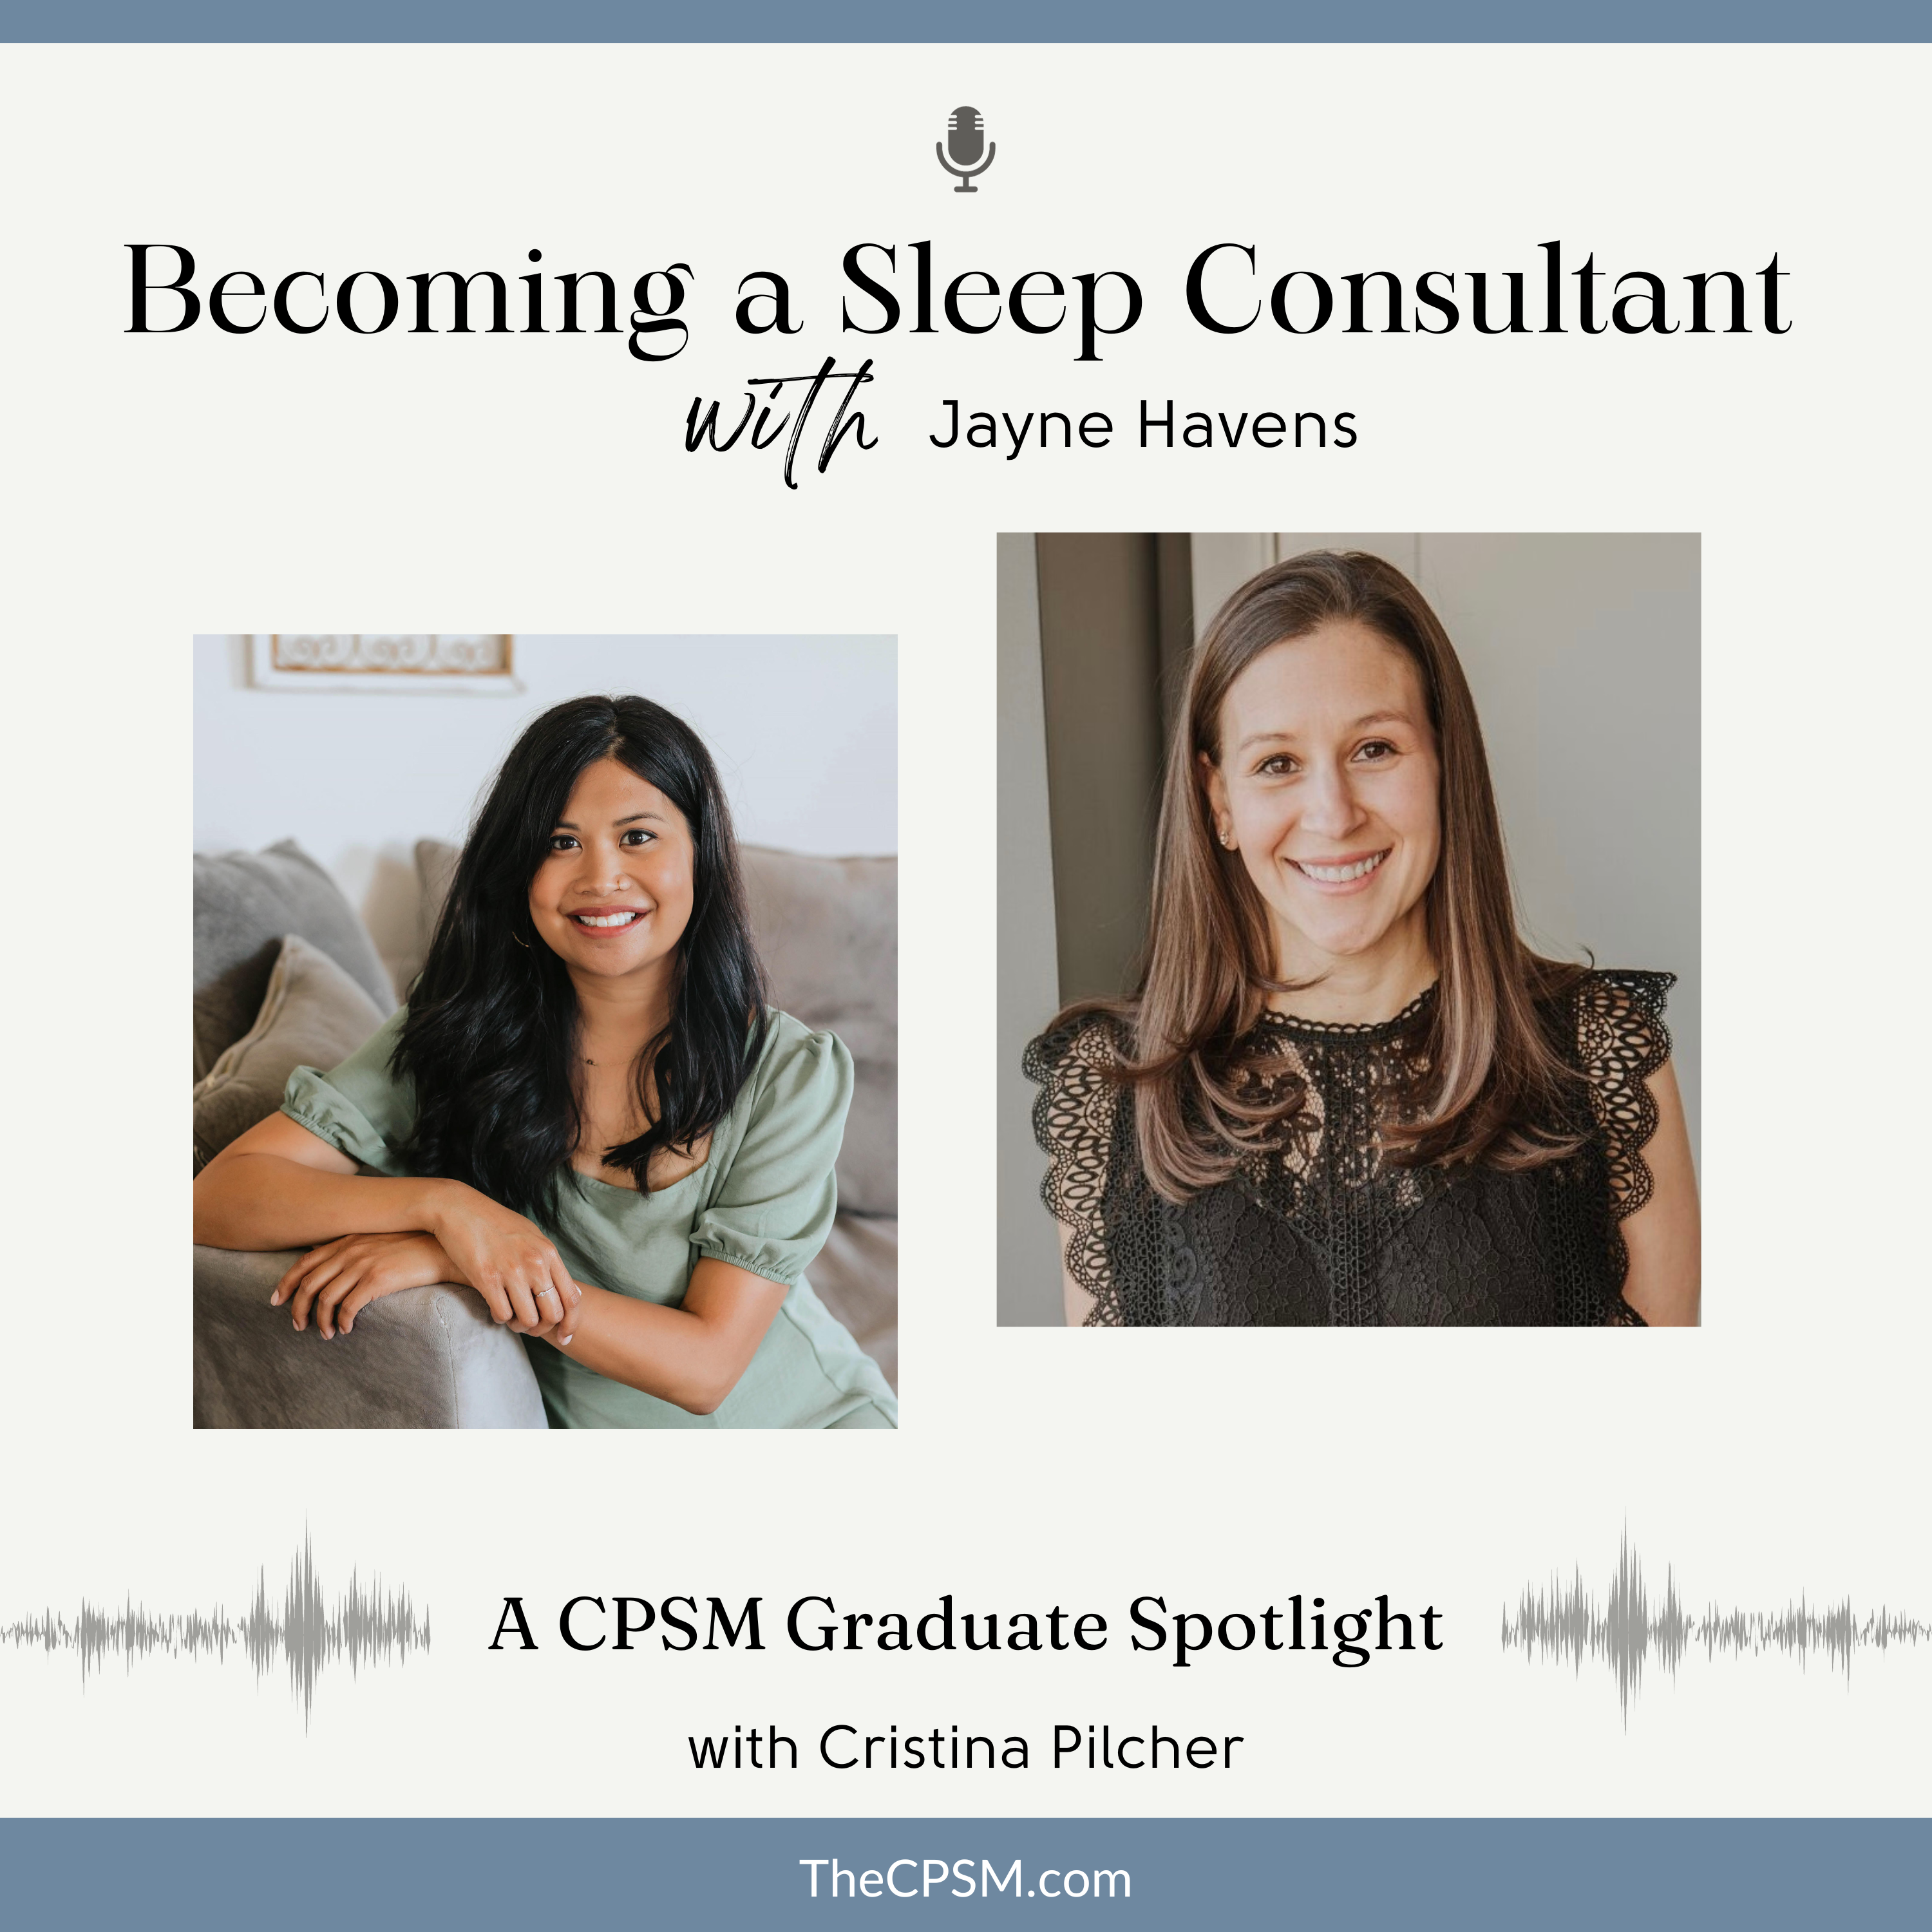 A CPSM Graduate Spotlight: Cristina Pilcher